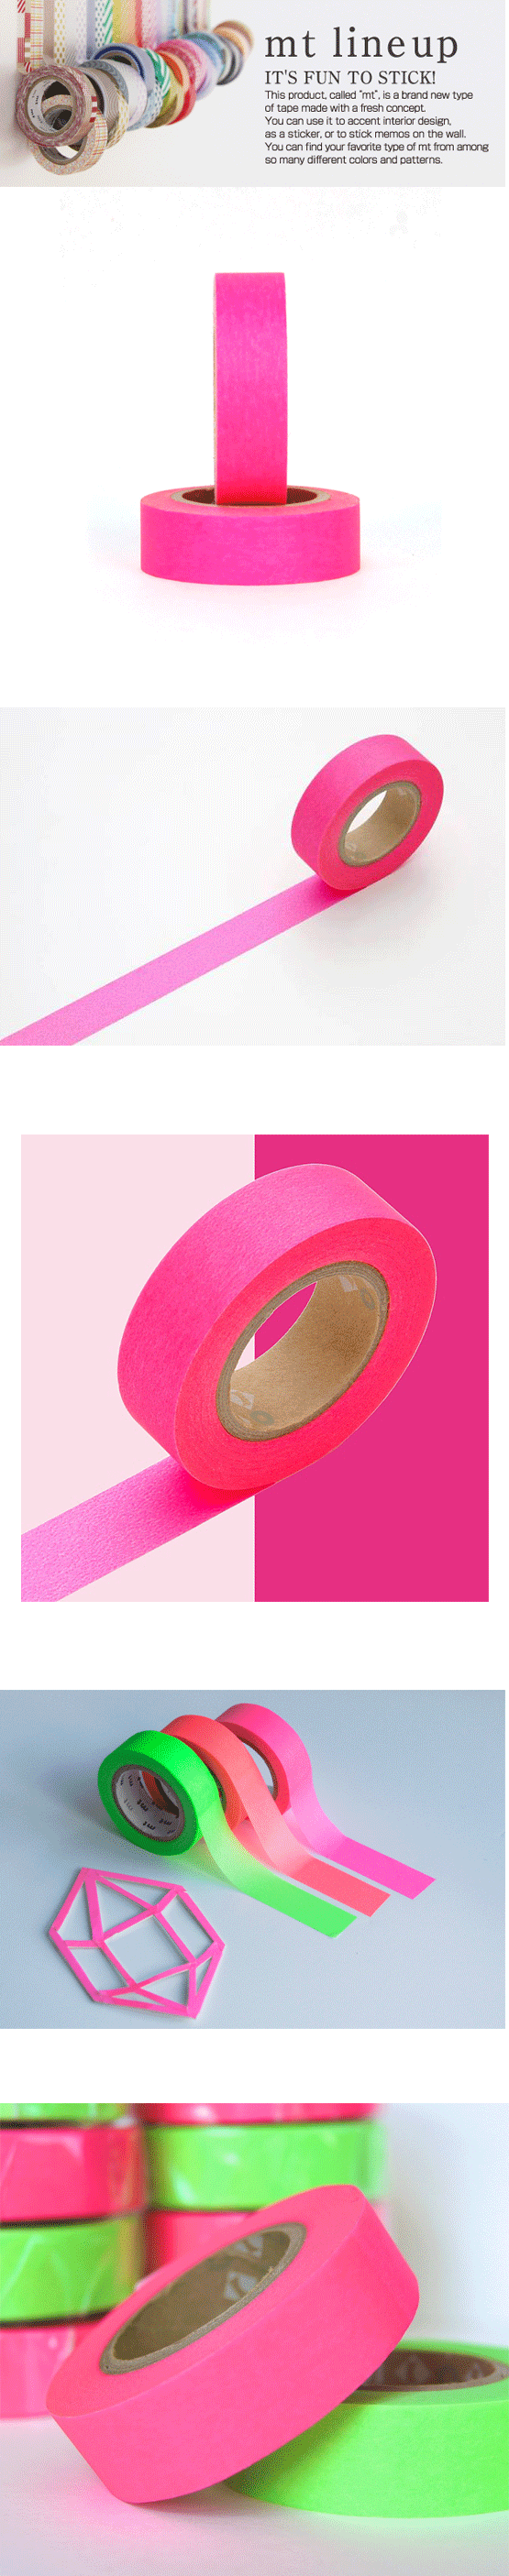 mt hot pink tape [pink deco tape, mt pink tape, pink mt tape]